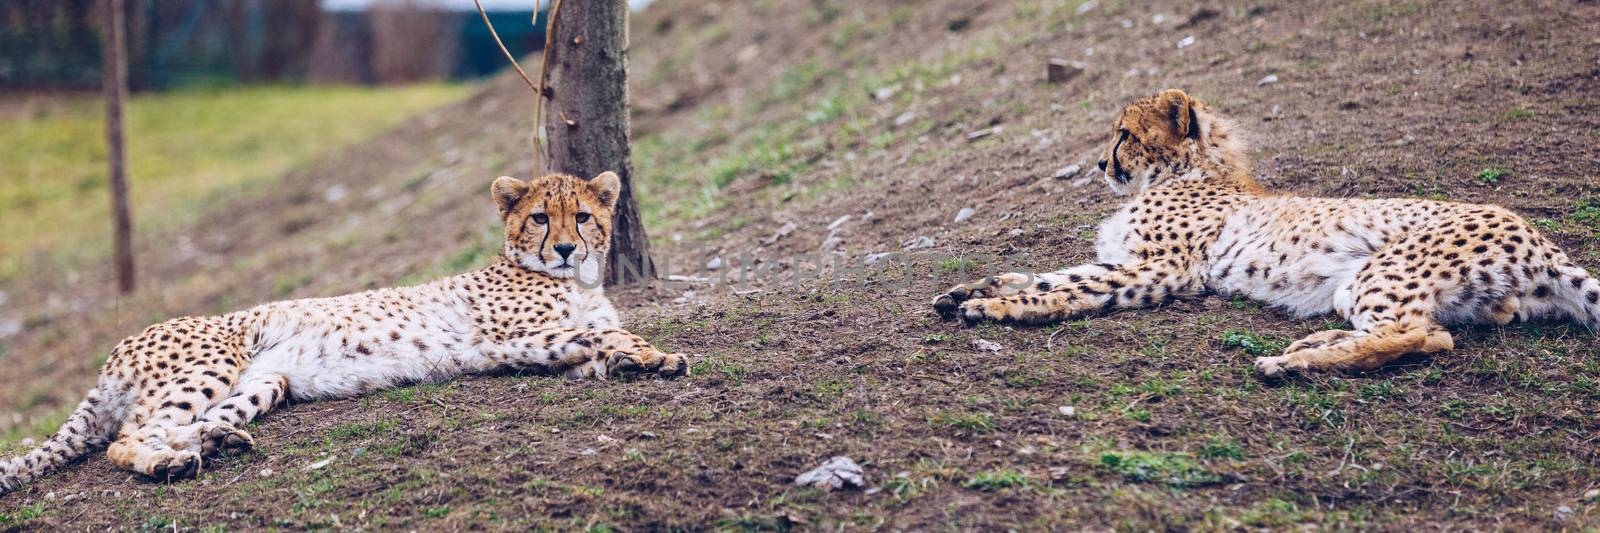 Cheetah, friendly animals at the Prague Zoo. View of the cheetah by DaLiu